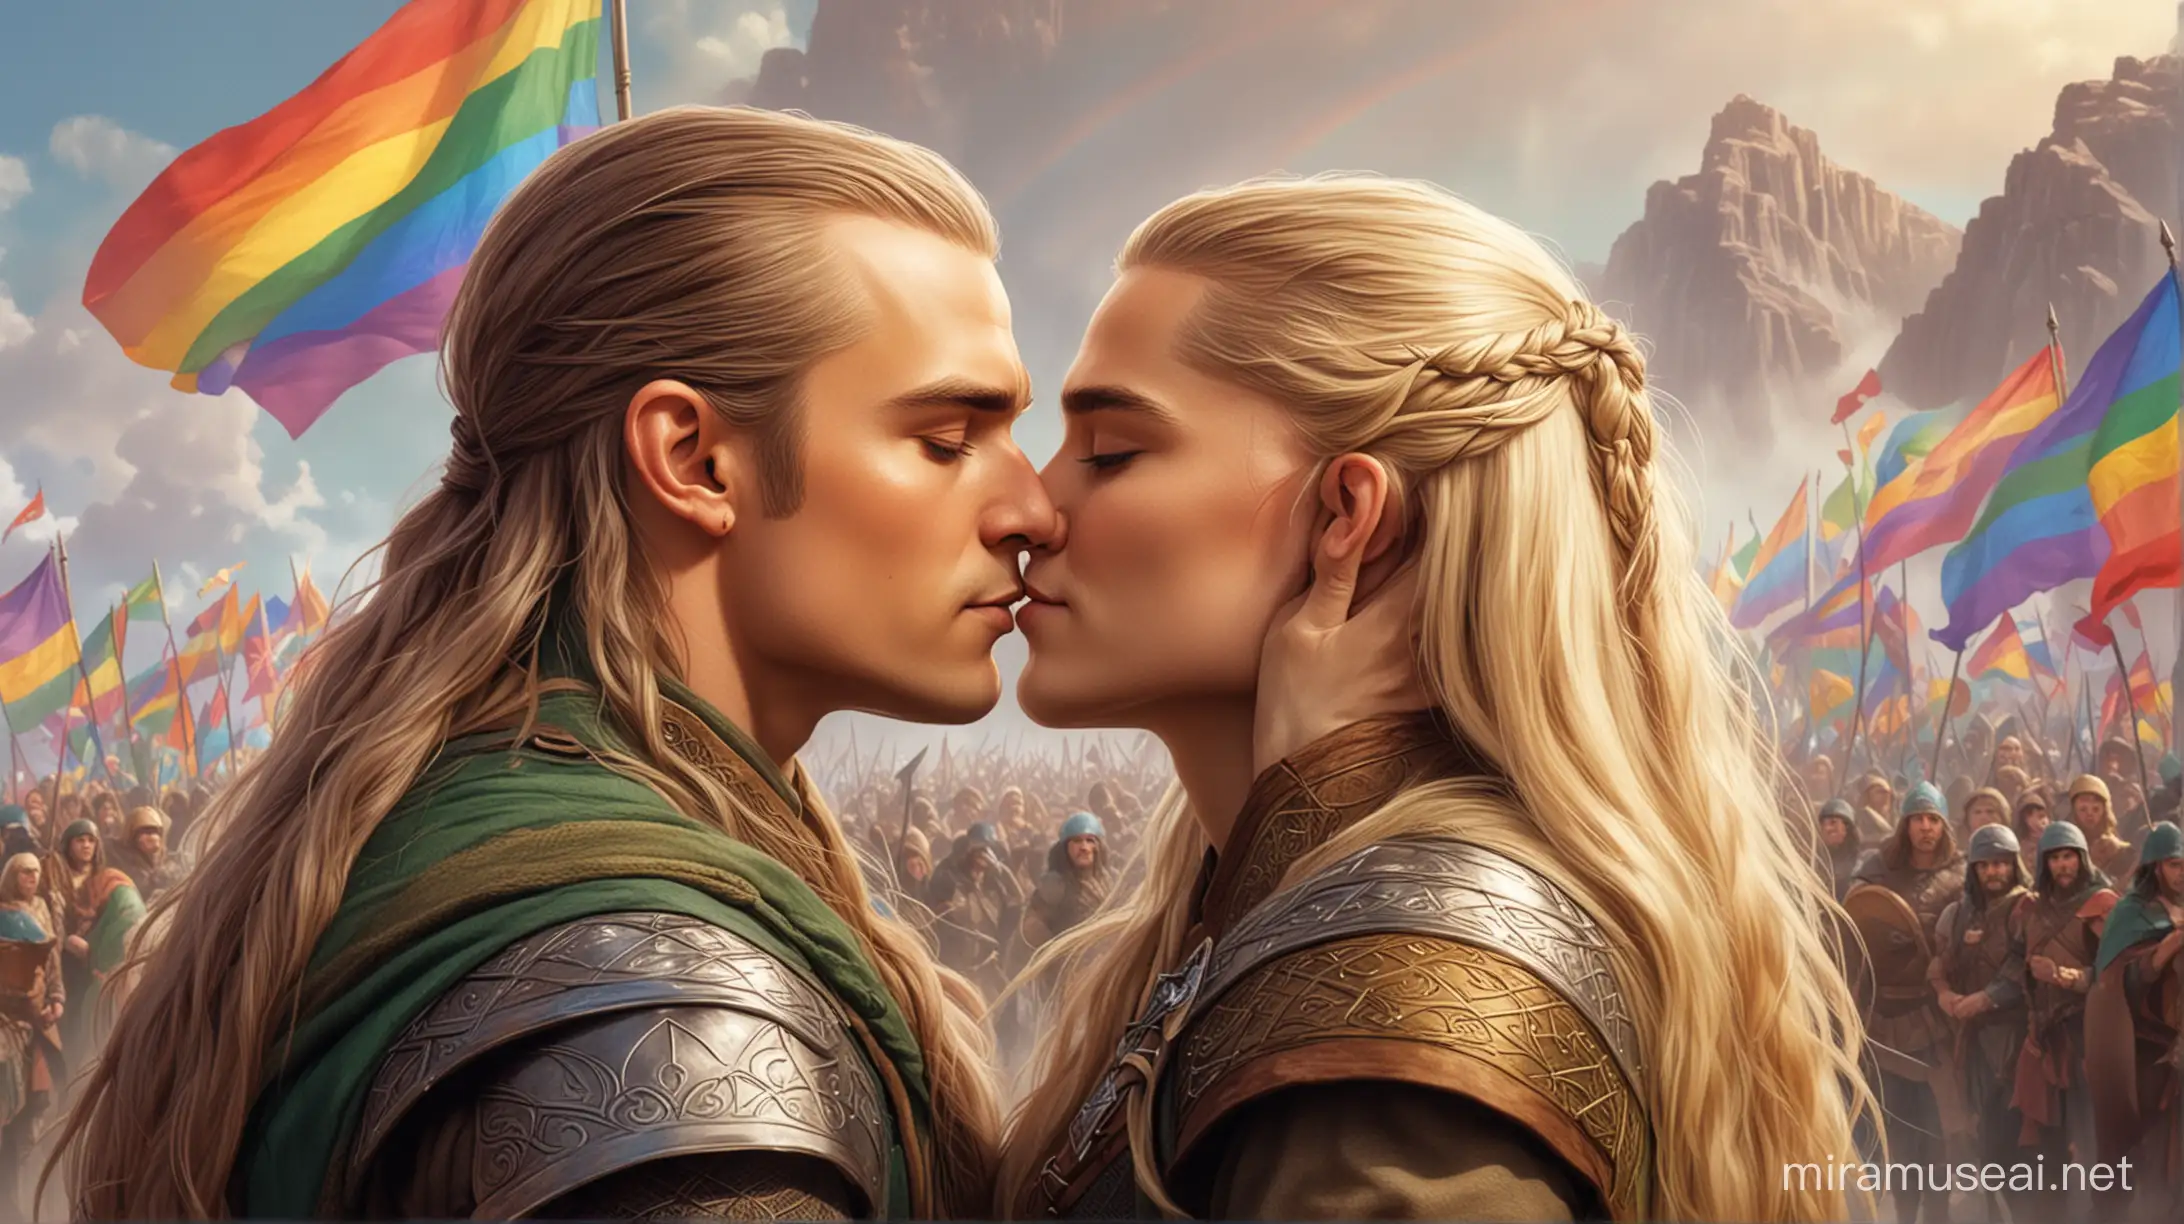 Legolas and Gimli kissing, fantasy army in the background, lgbt flags, rainbow, correct anatomy